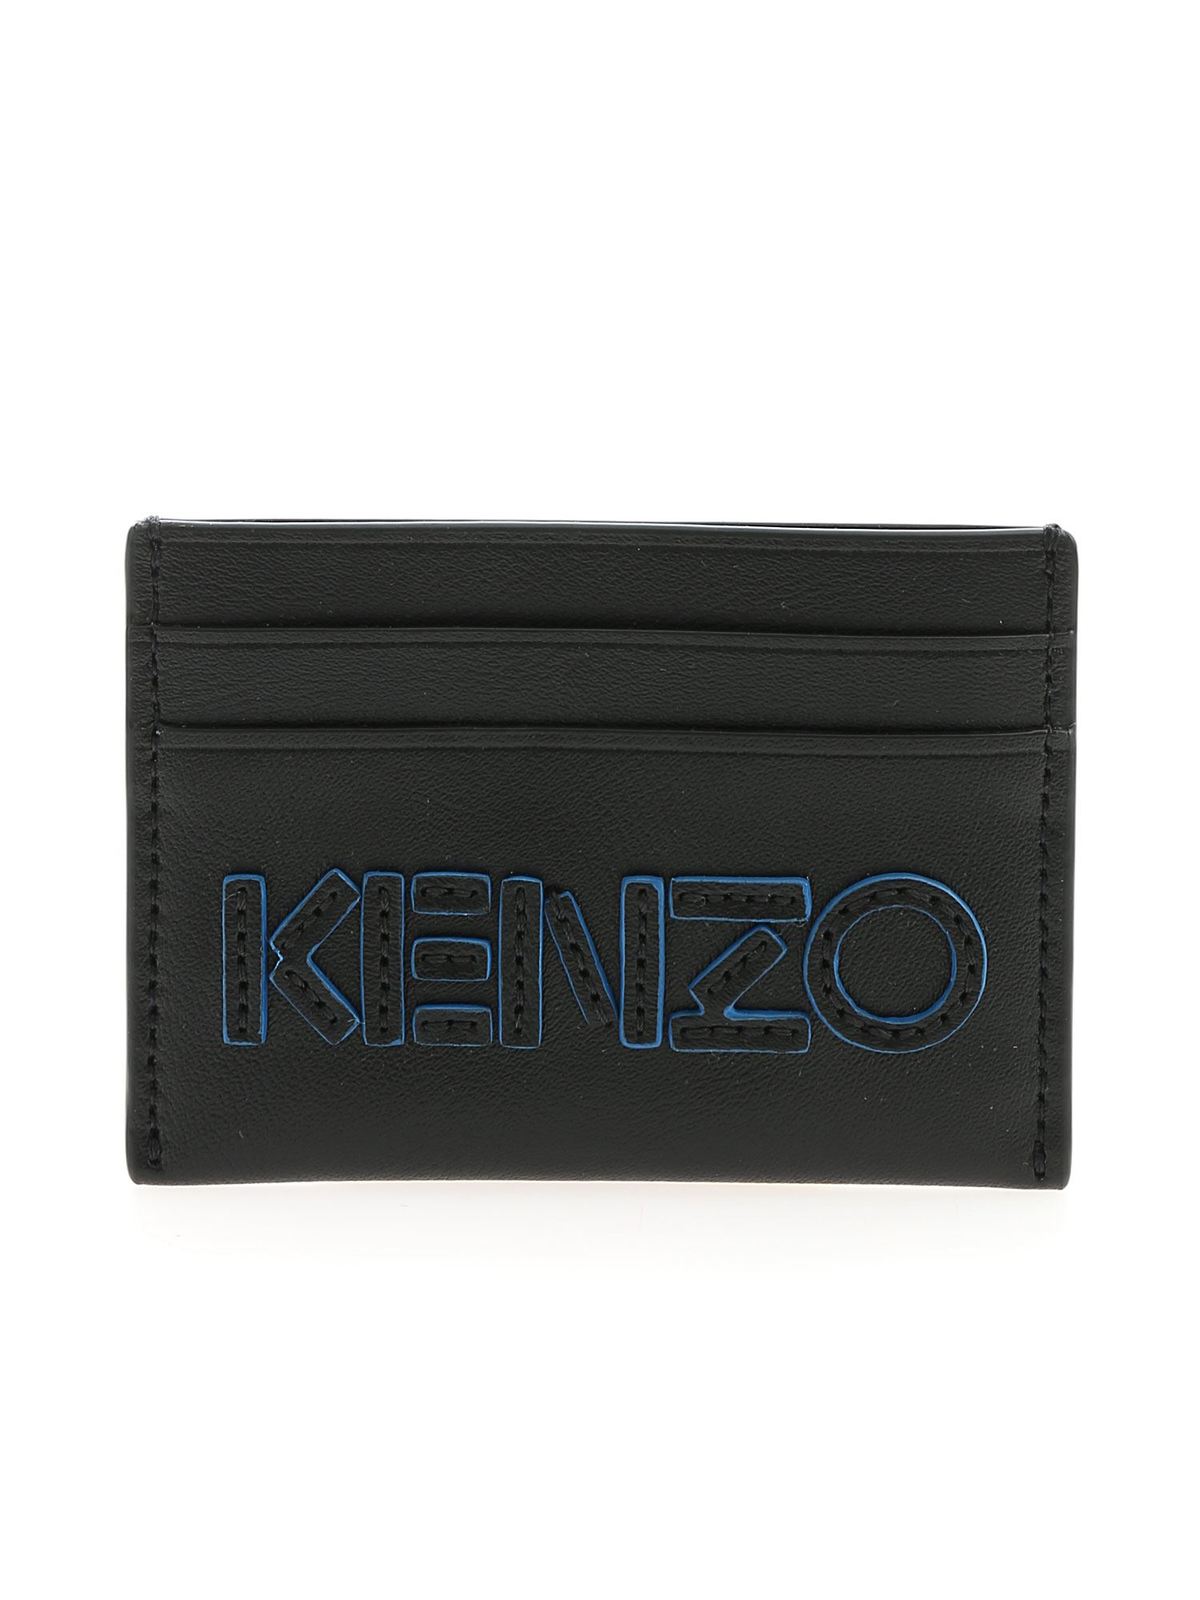 Kenzo - KENZO logo card holder in black 